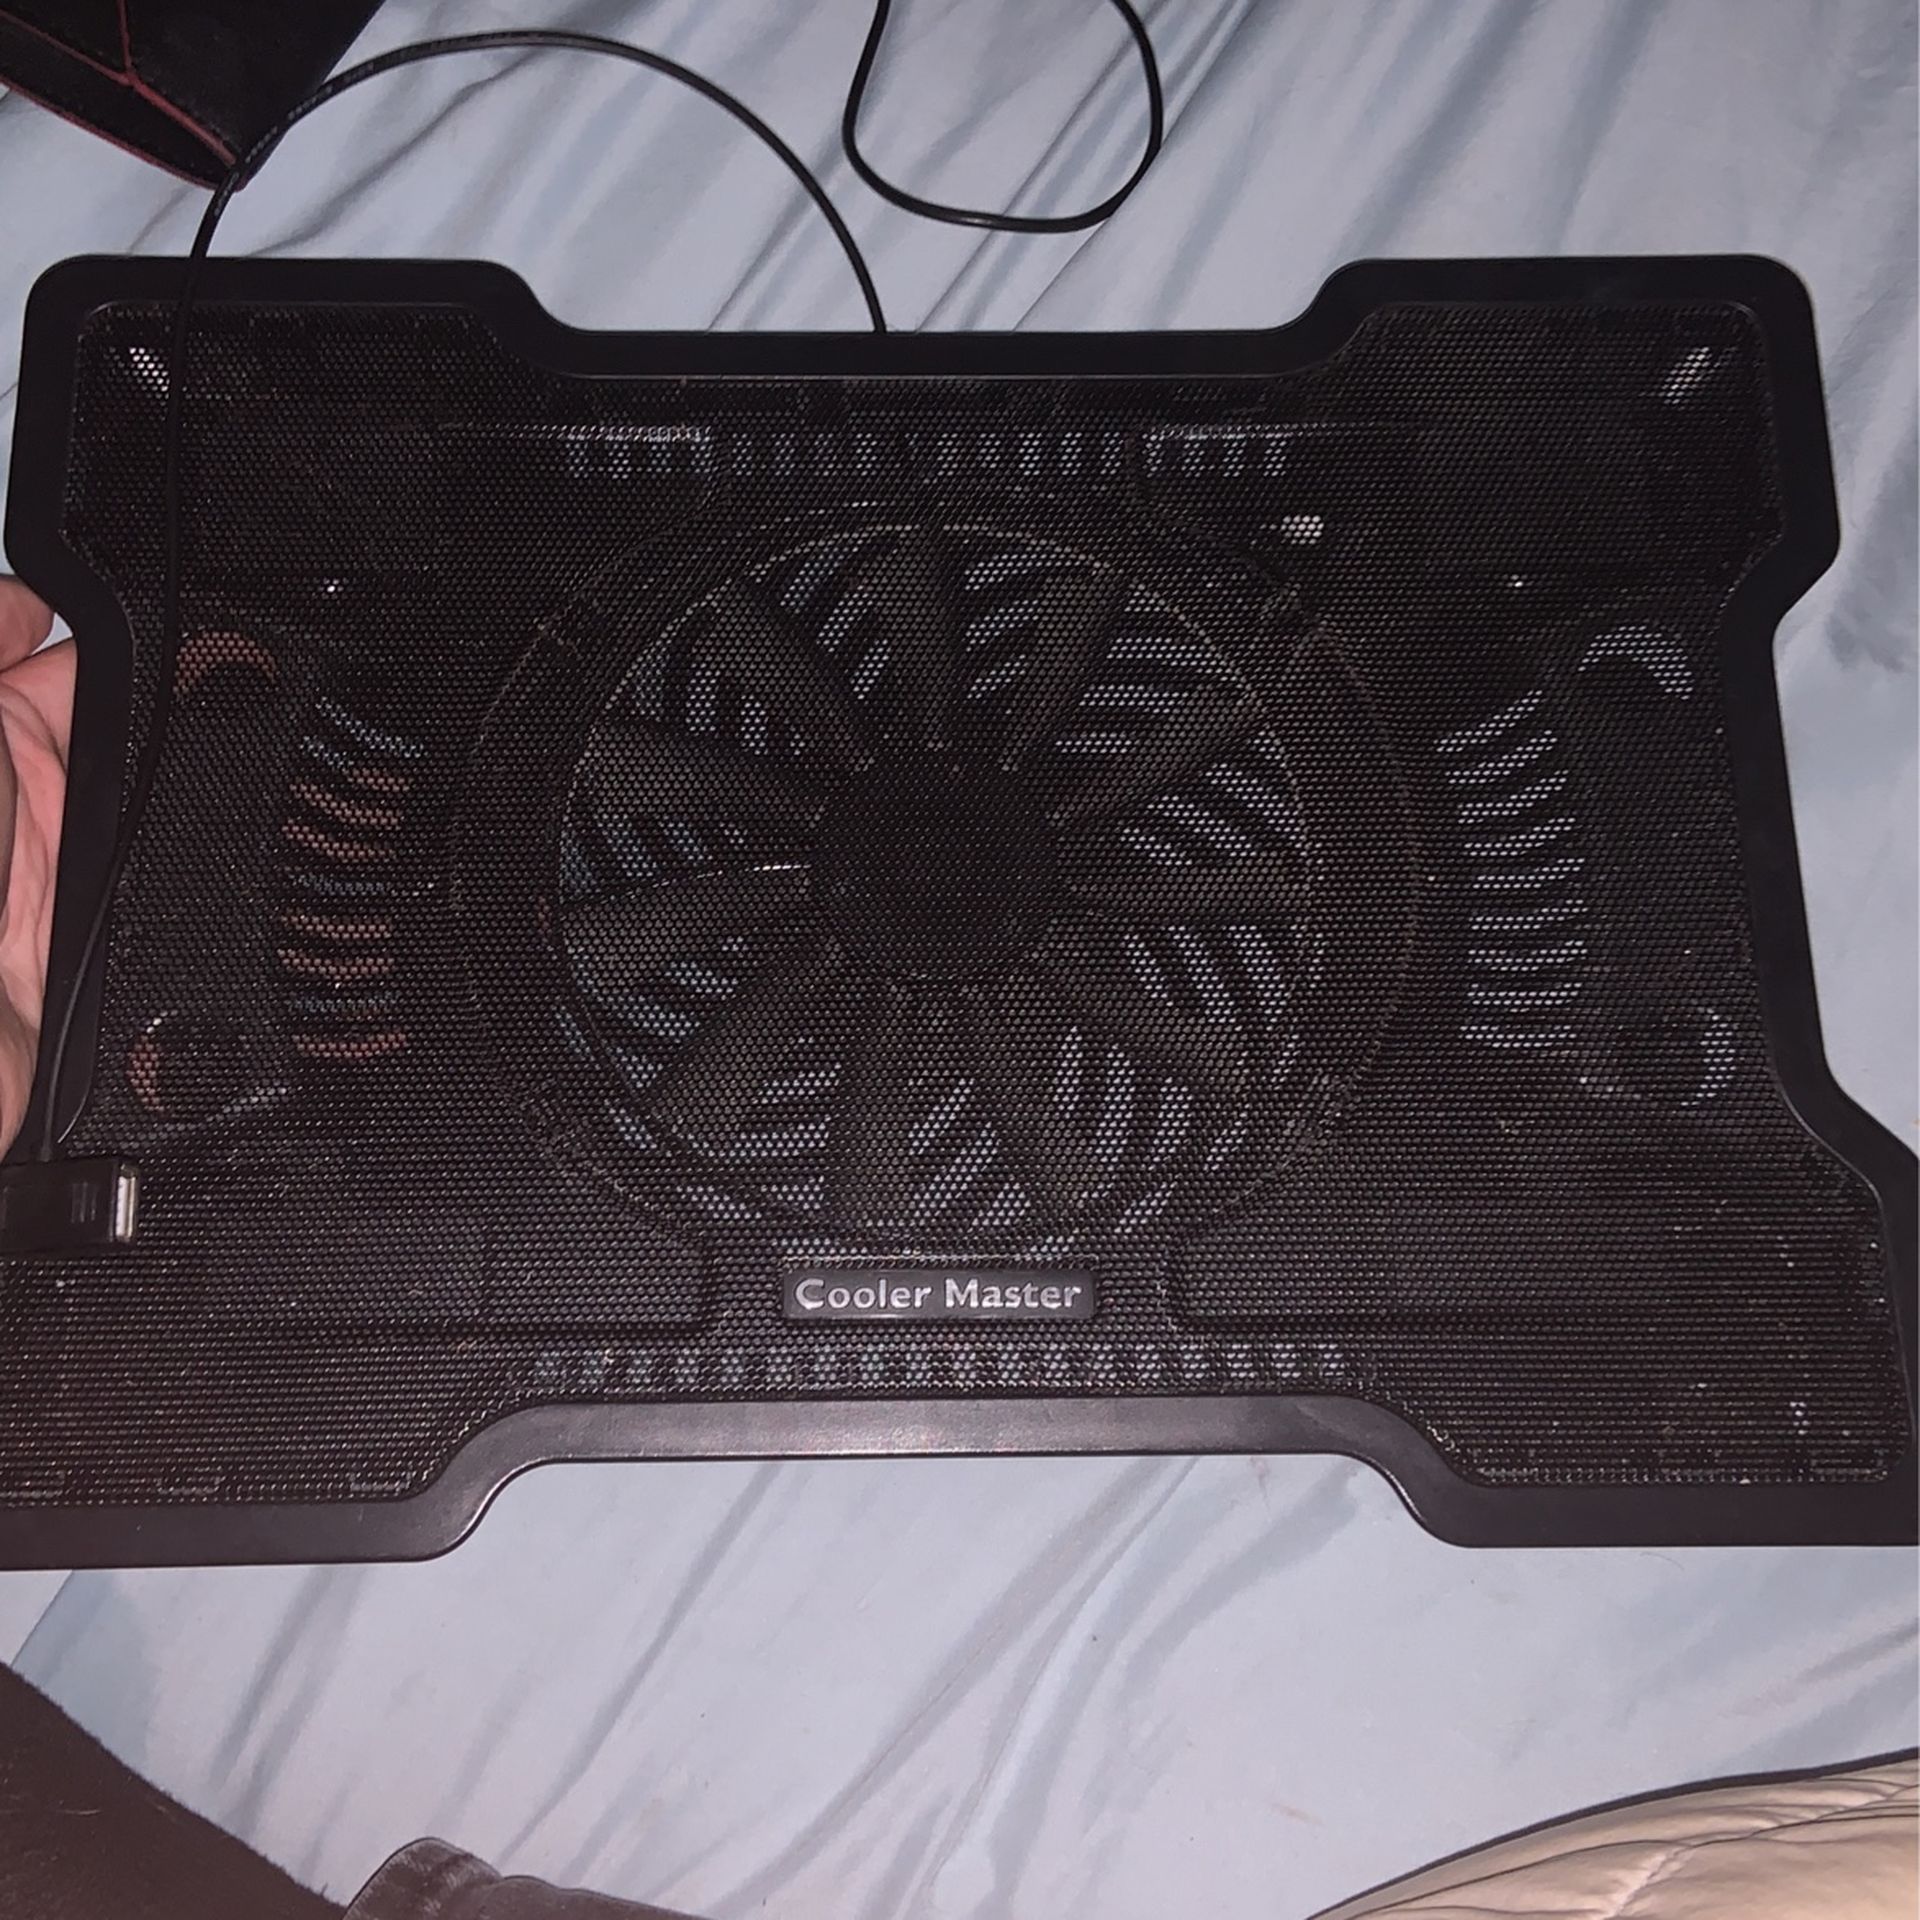 Cooler Master Laptop Fan